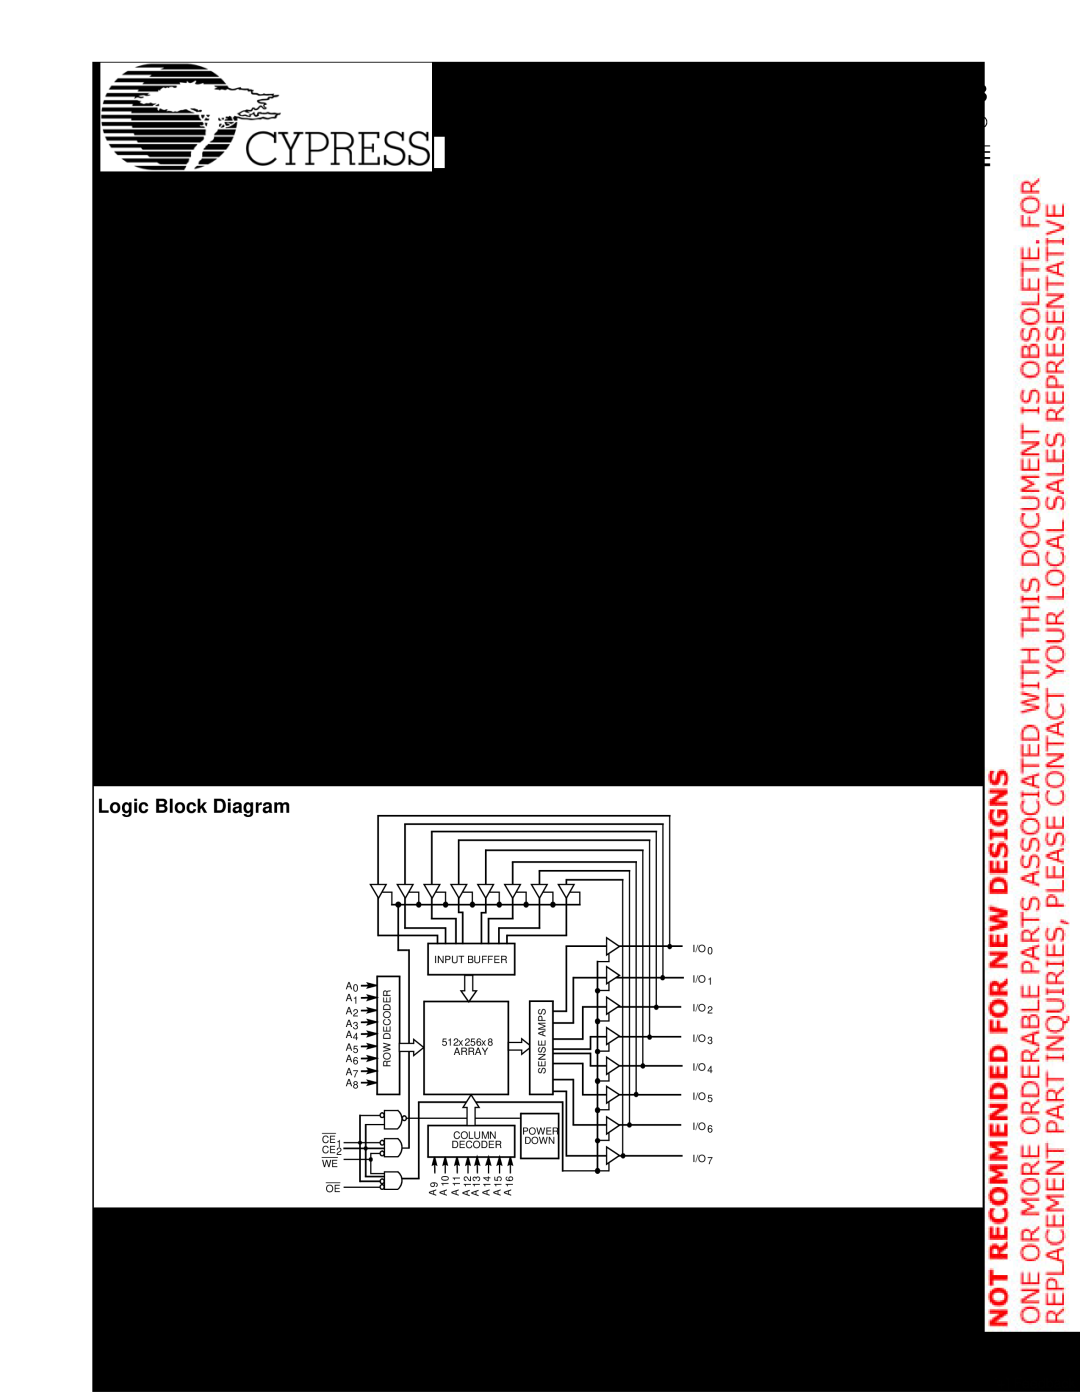 Cypress manual CY62128B MoBL, Features, Functional Description1, Logic Block Diagram, TTL-compatible inputs and outputs 